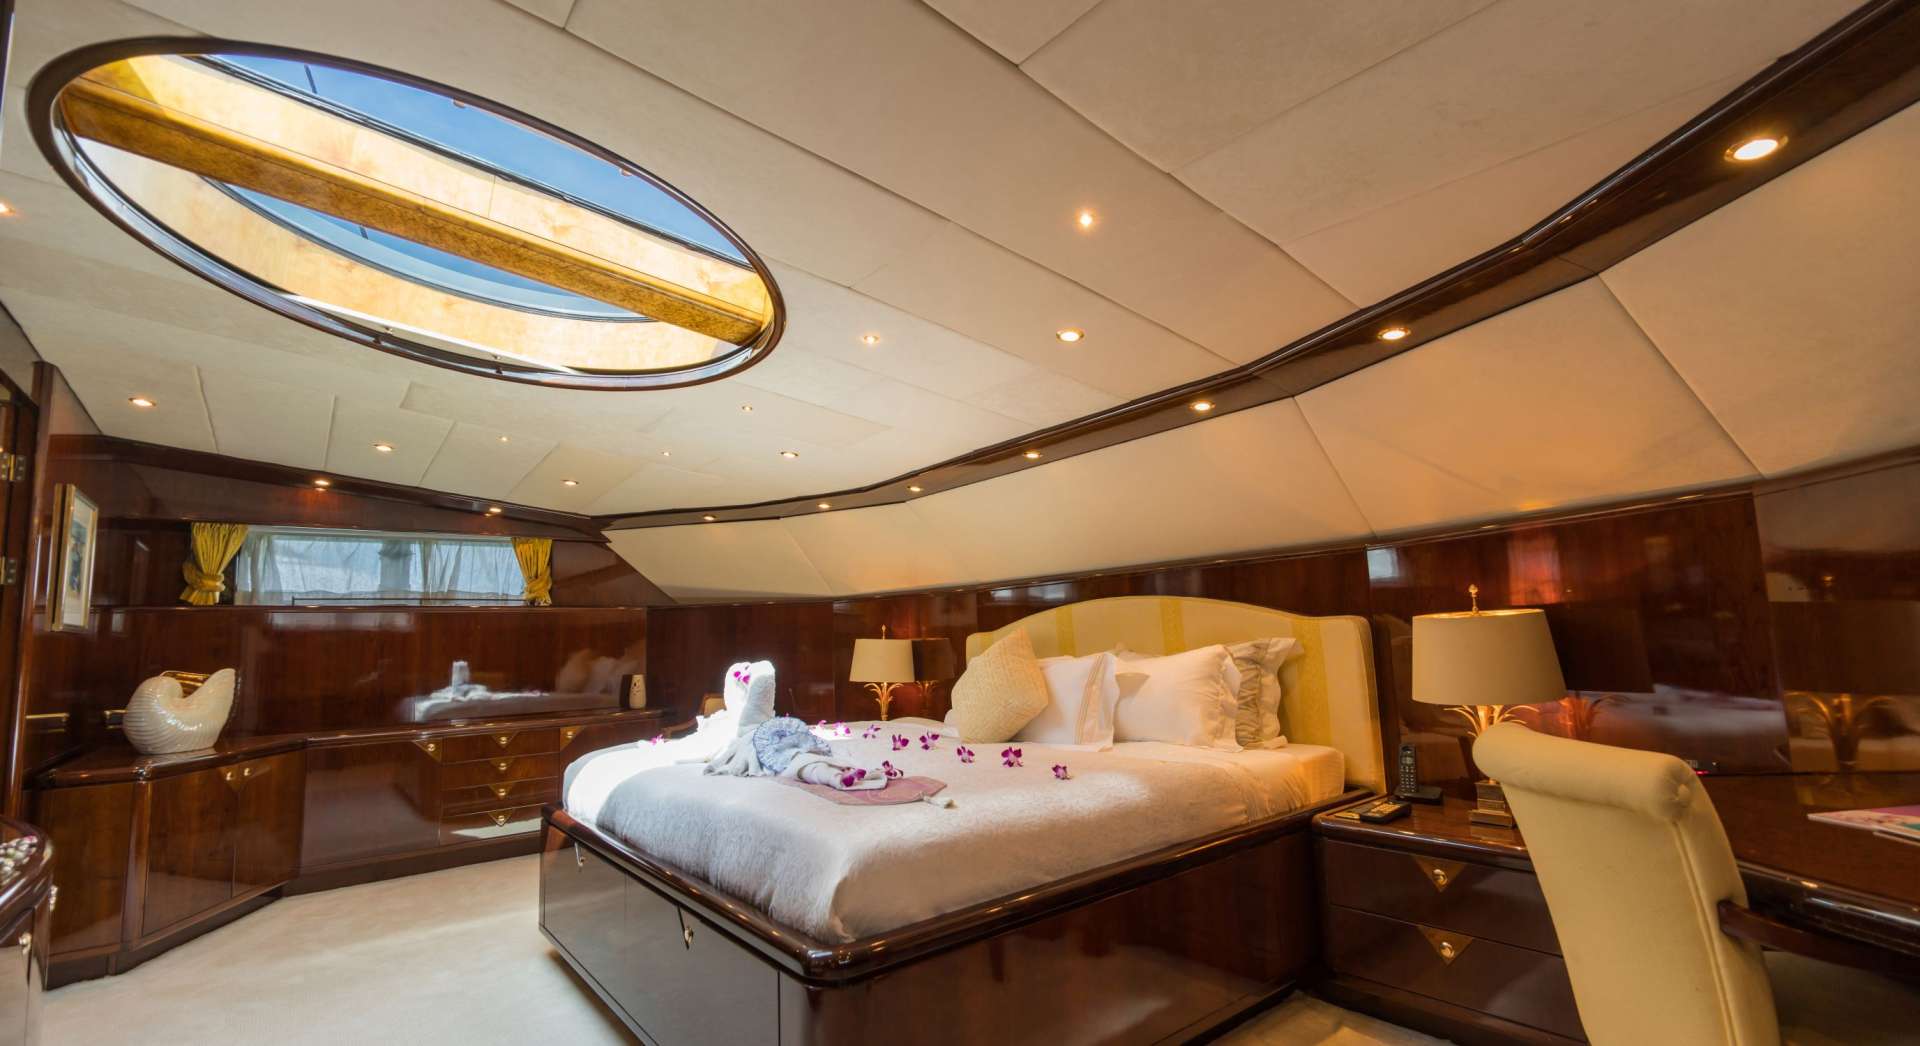 xanadu of london - Luxury yacht charter Thailand & Boat hire in SE Asia 6